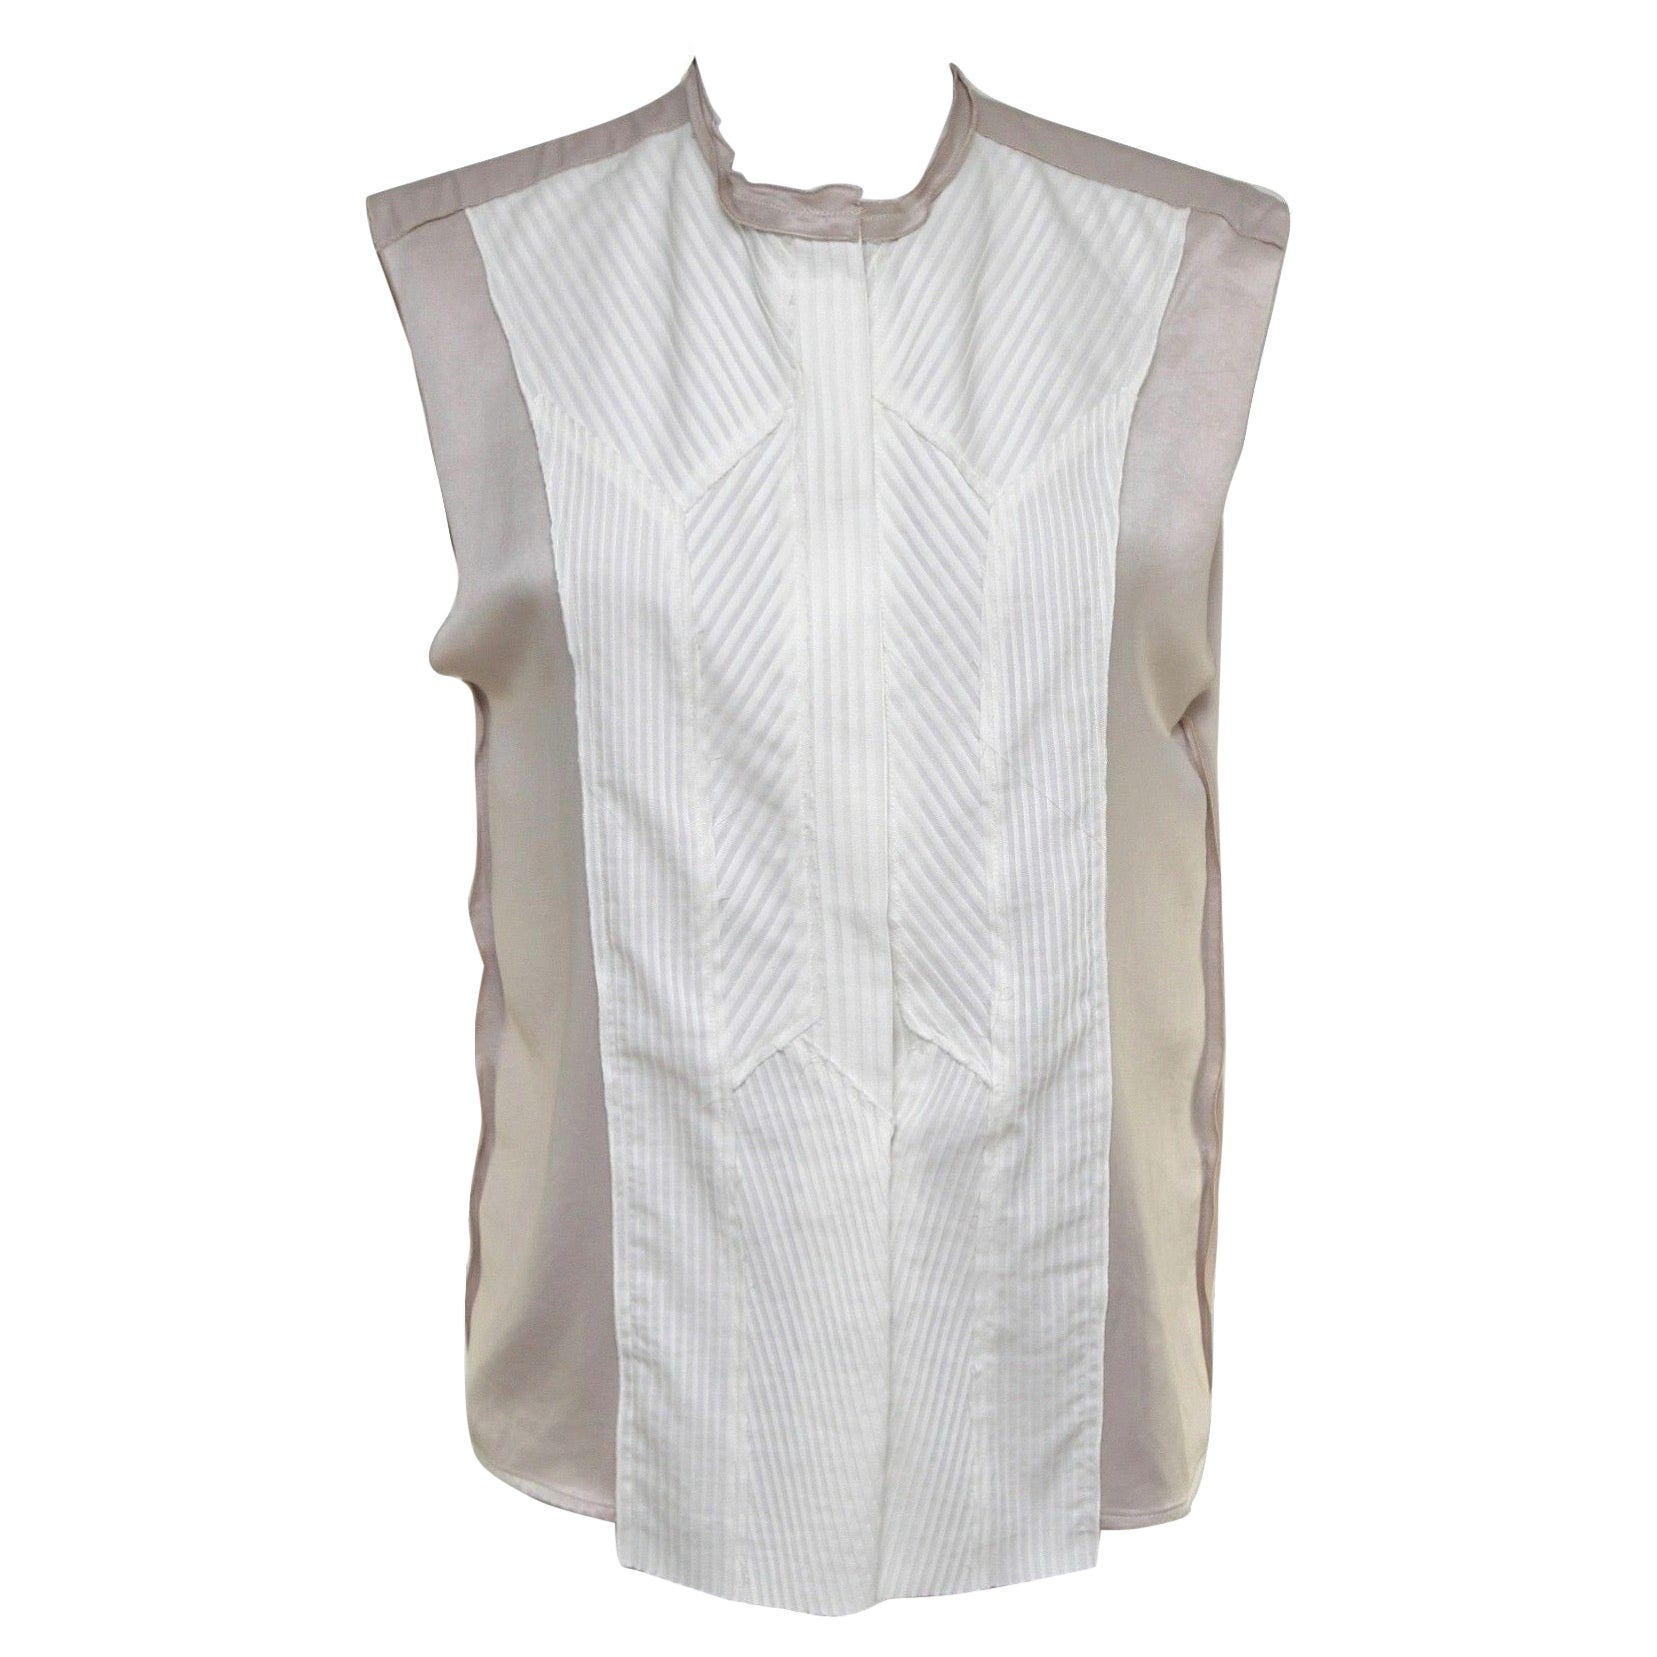 BOTTEGA VENETA Blouse Sleeveless Shirt Top White Blush Snap Front Sz 38 BNWT